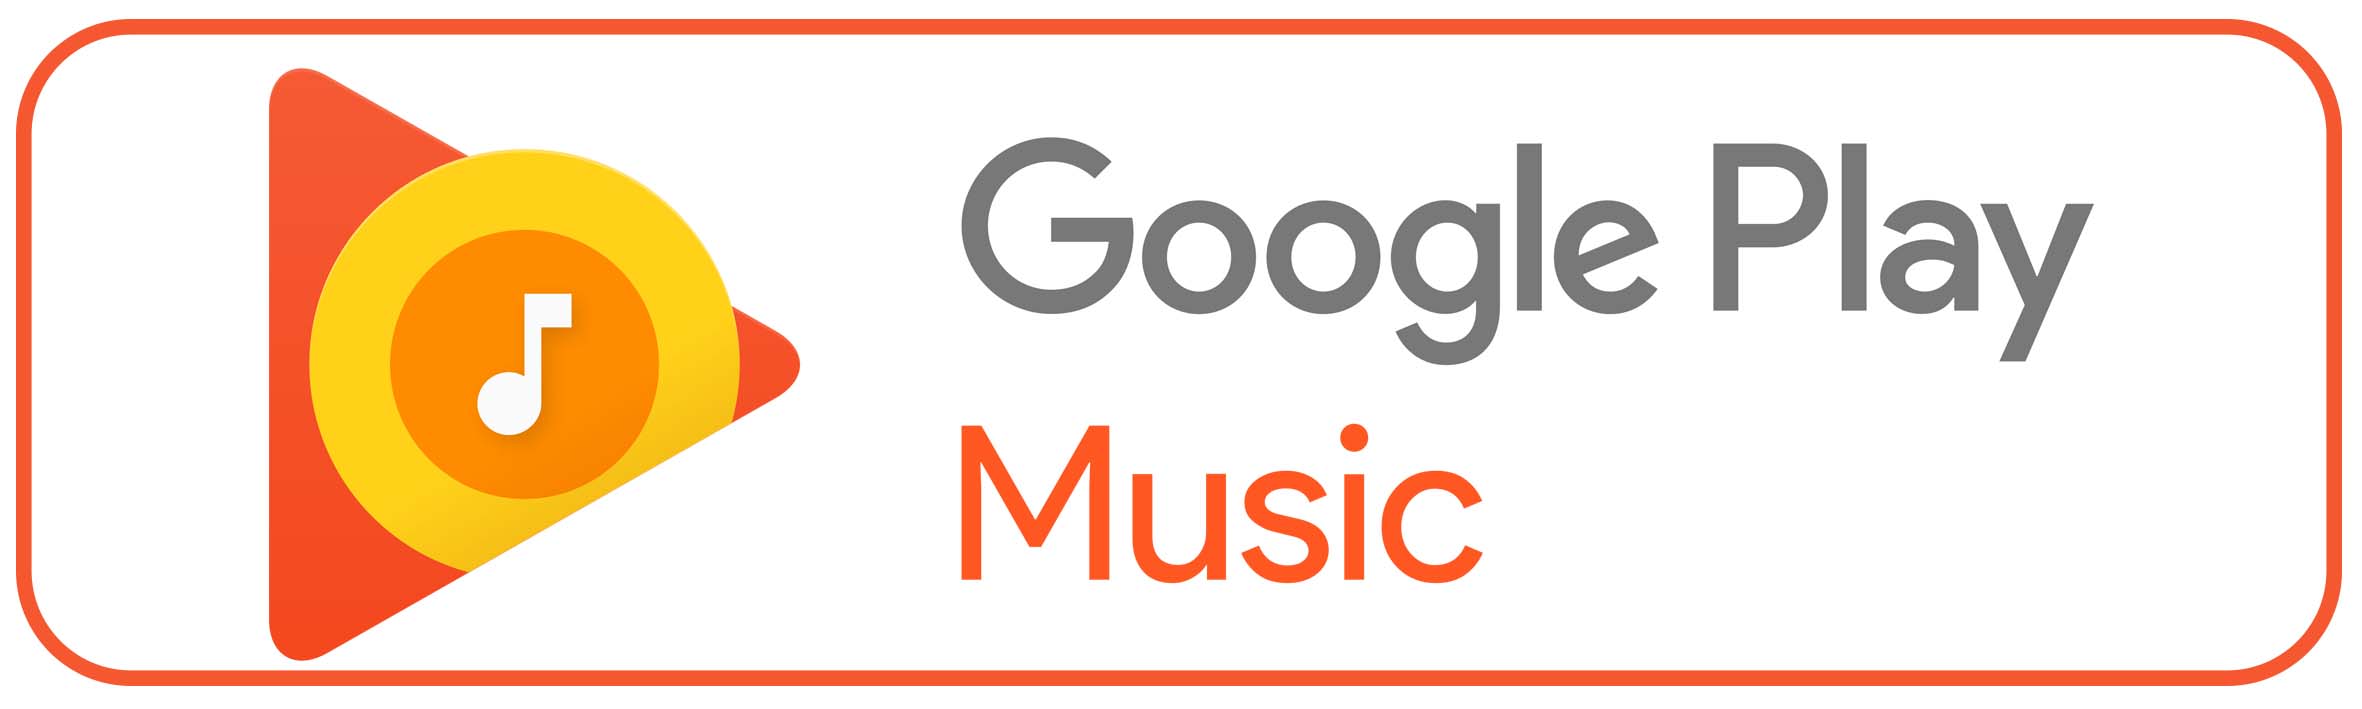 4Google Play Music.jpg